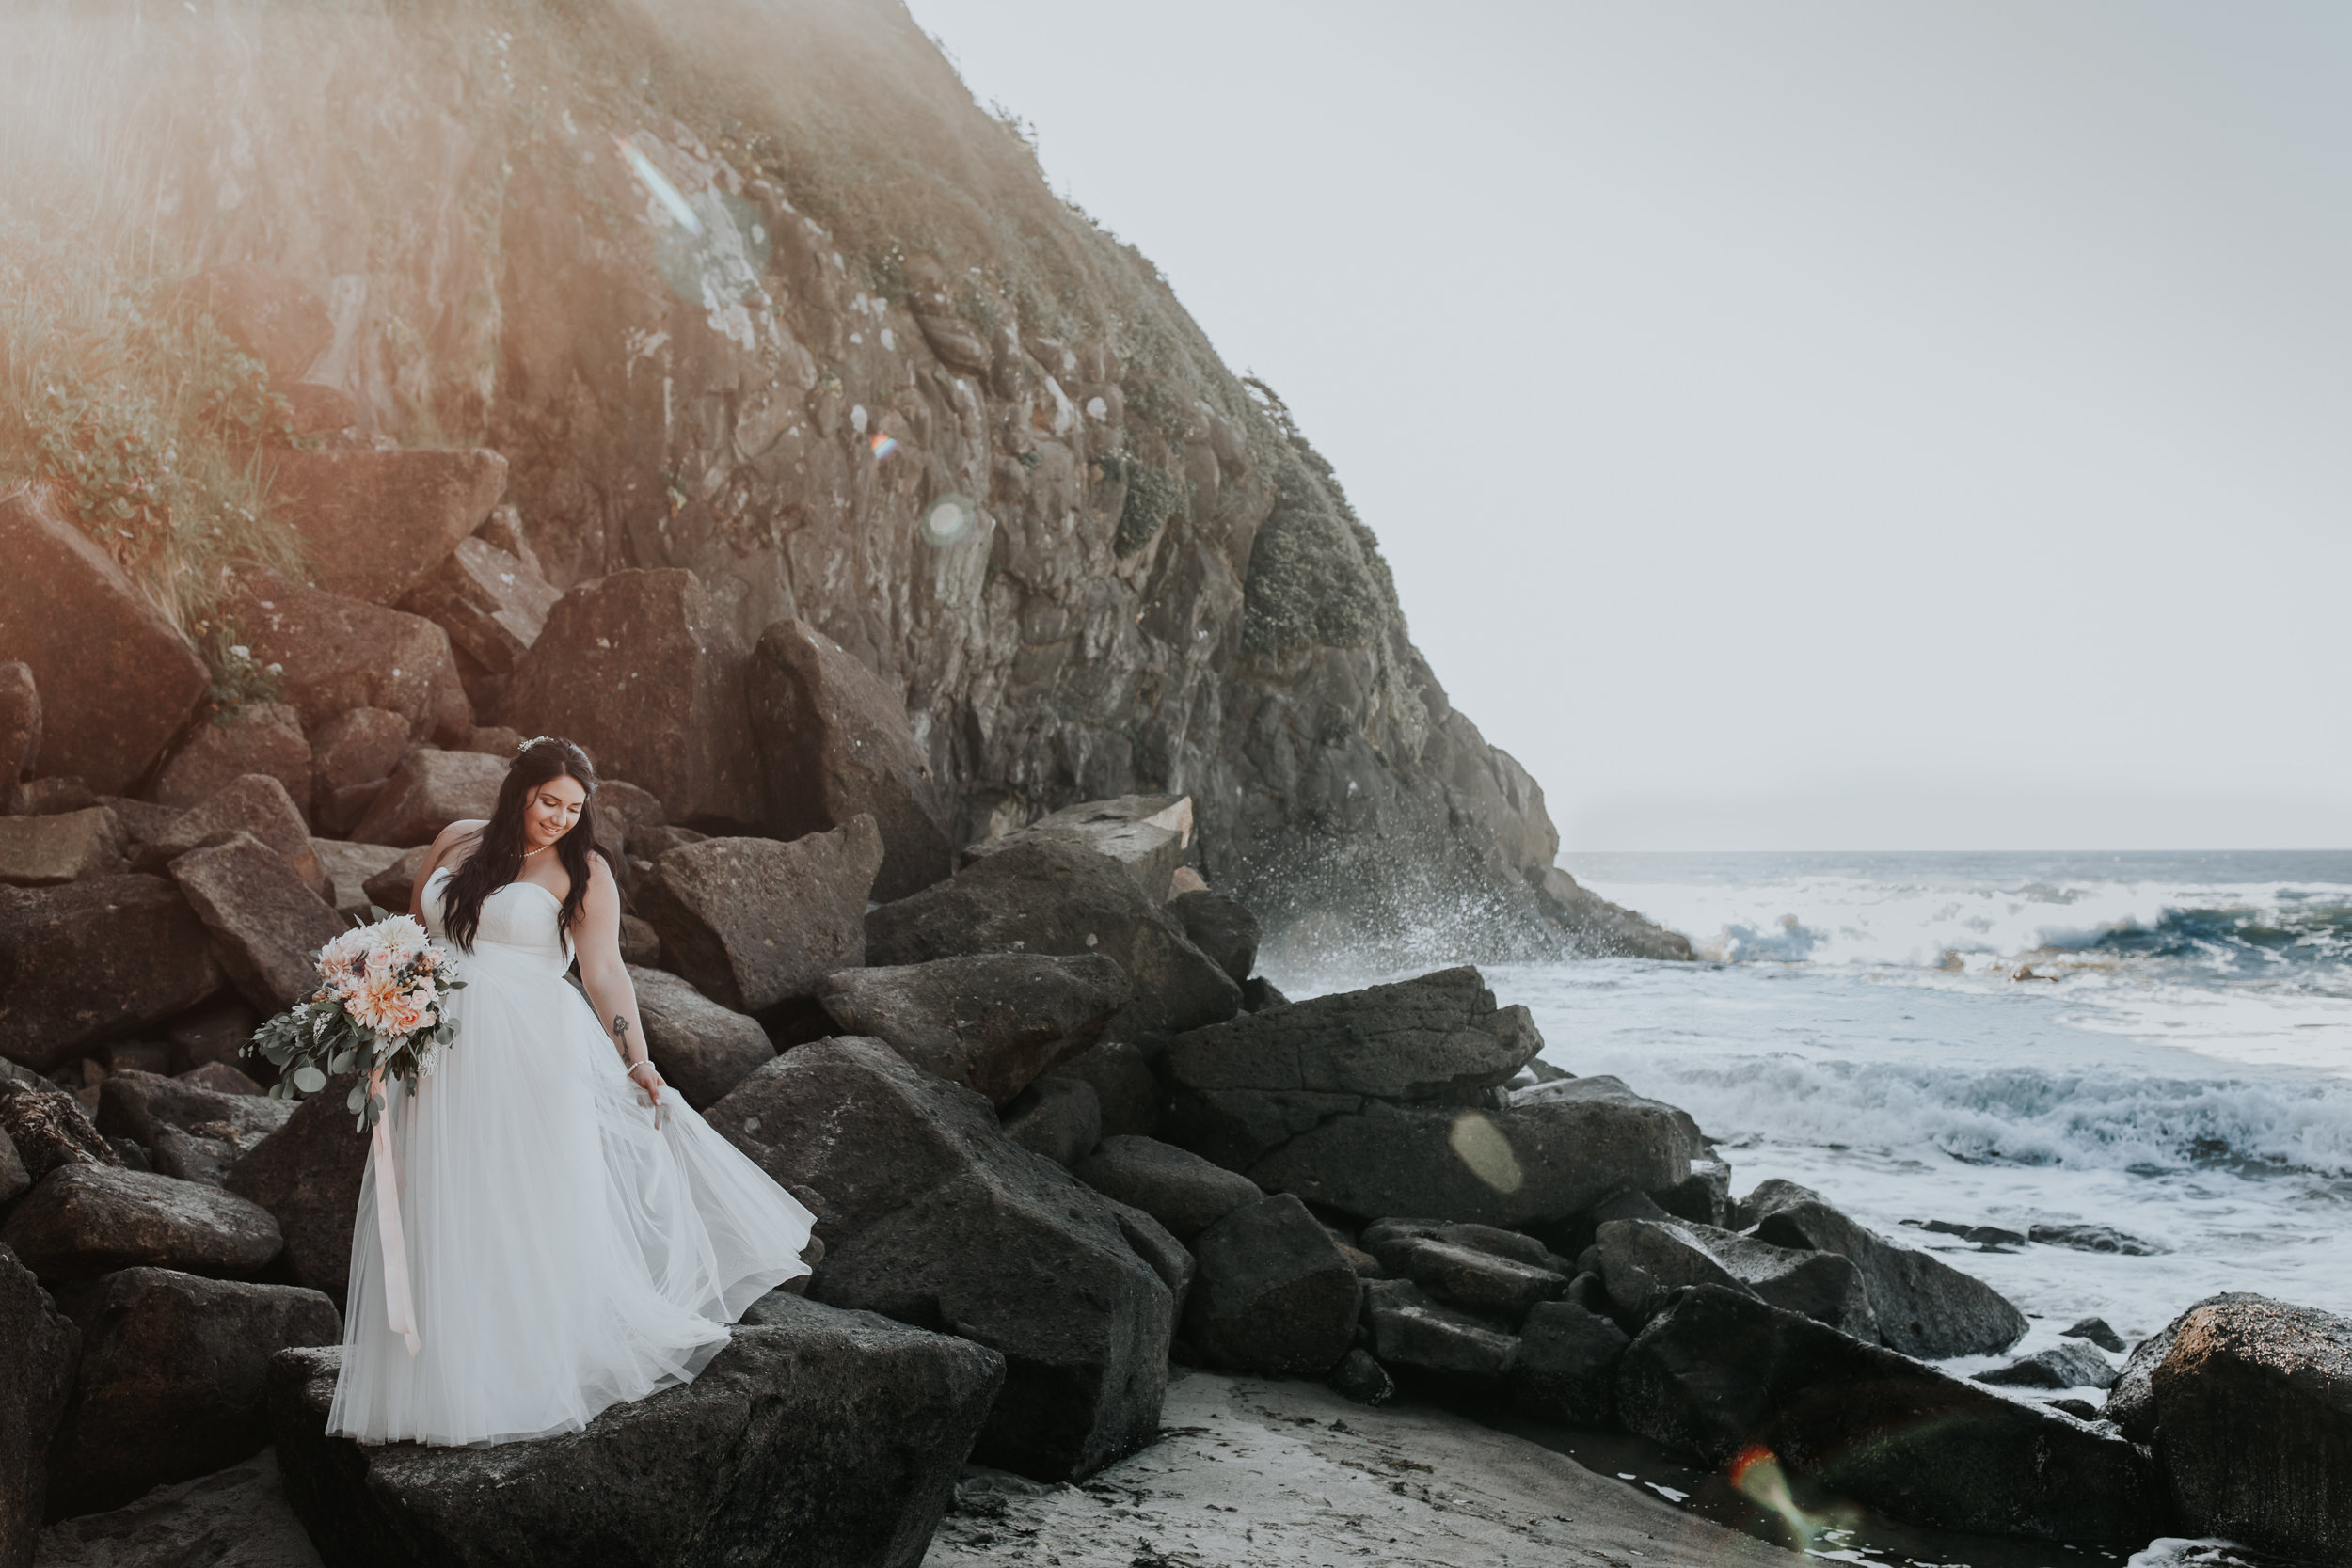 Oregon coast Wedding Photographer // Lincoln City, Oregon // Beach Wedding and Elopement